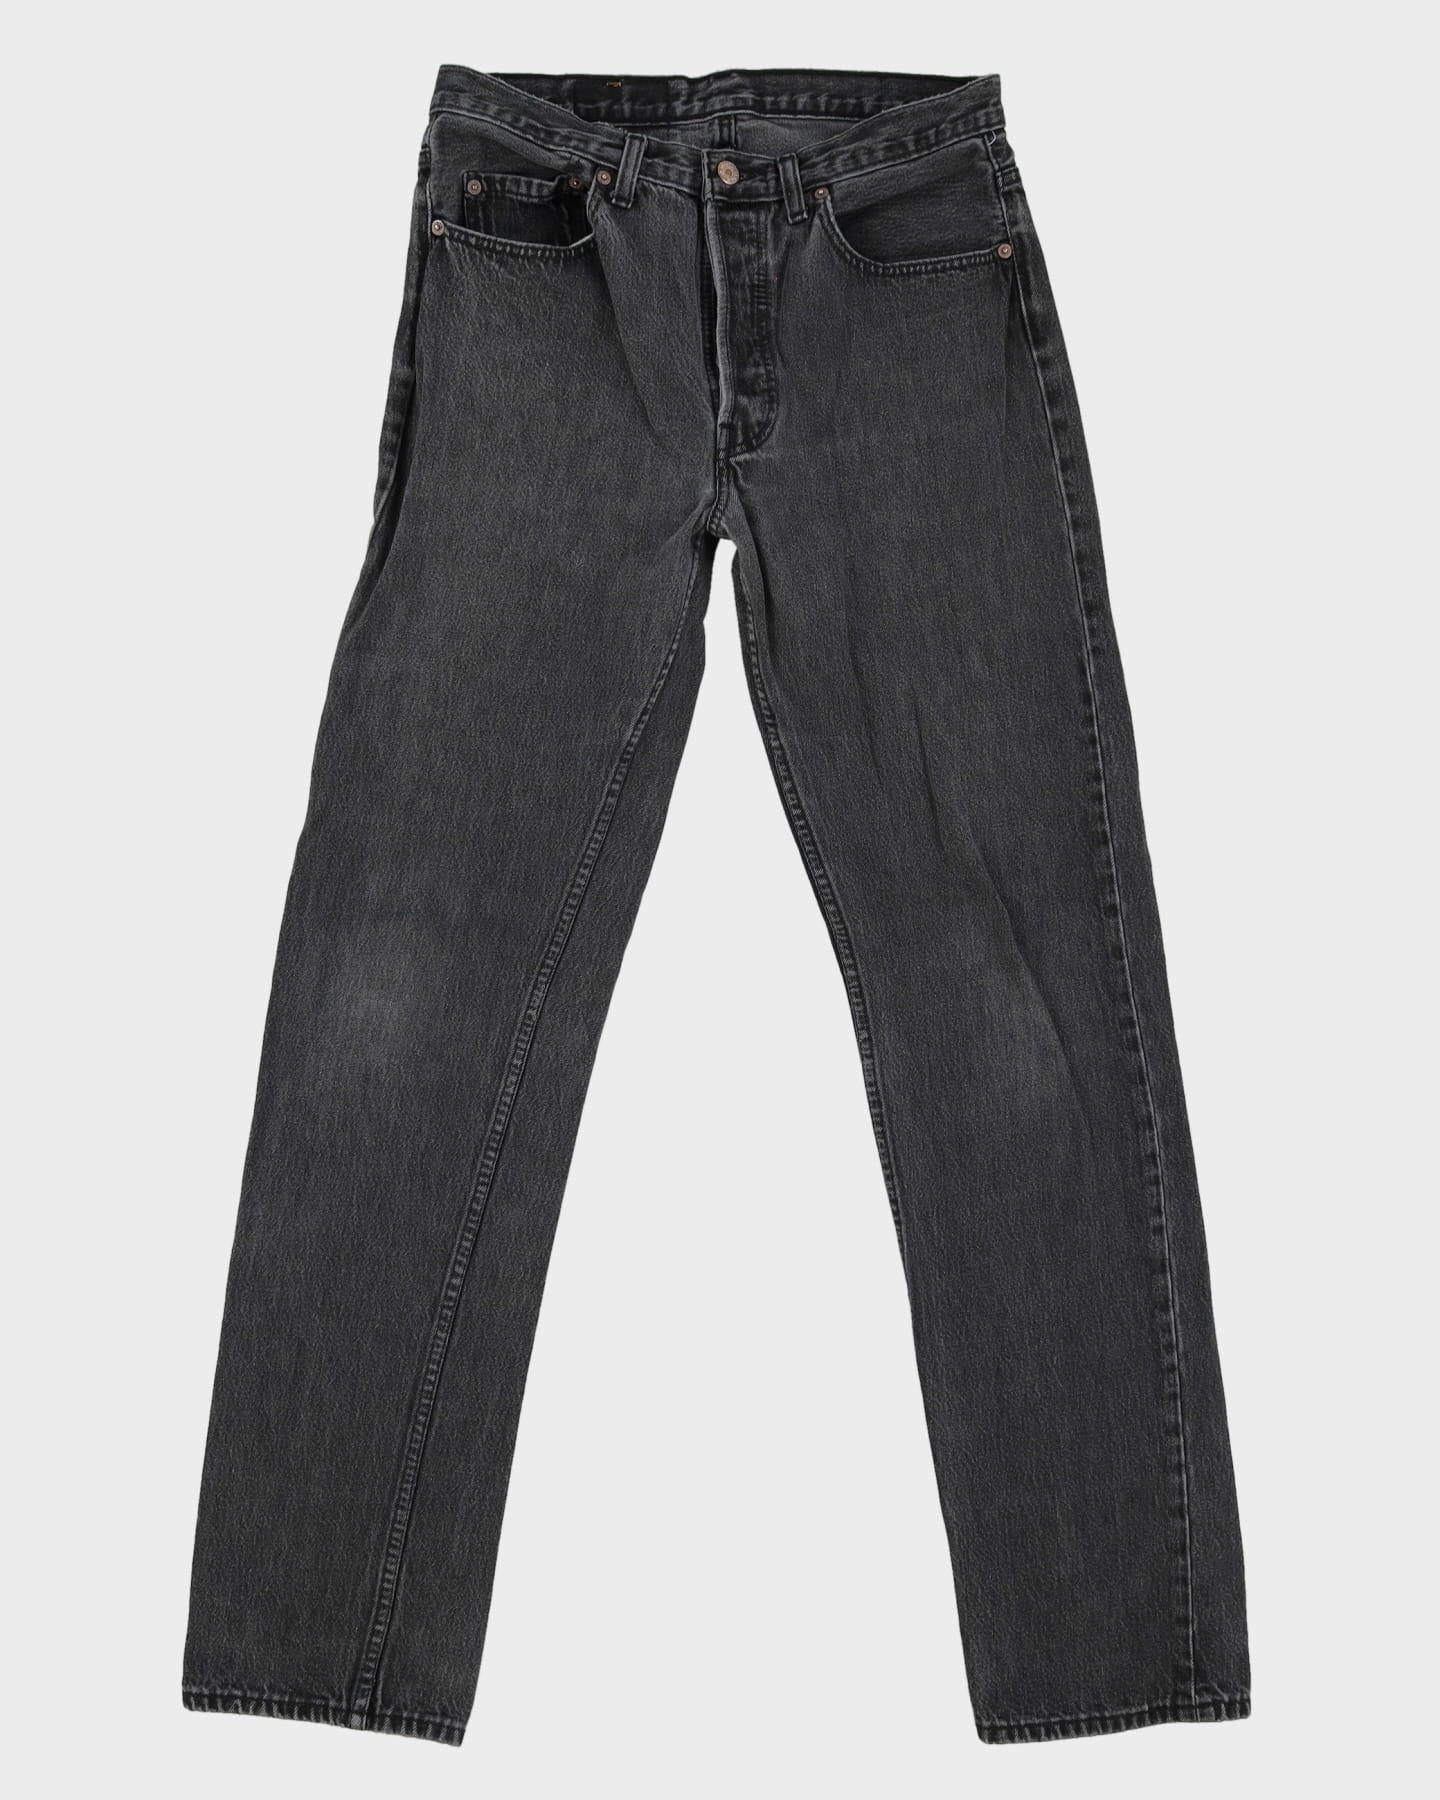 Vintage 80s Levi's 501 Faded Black Jeans - W32 L34